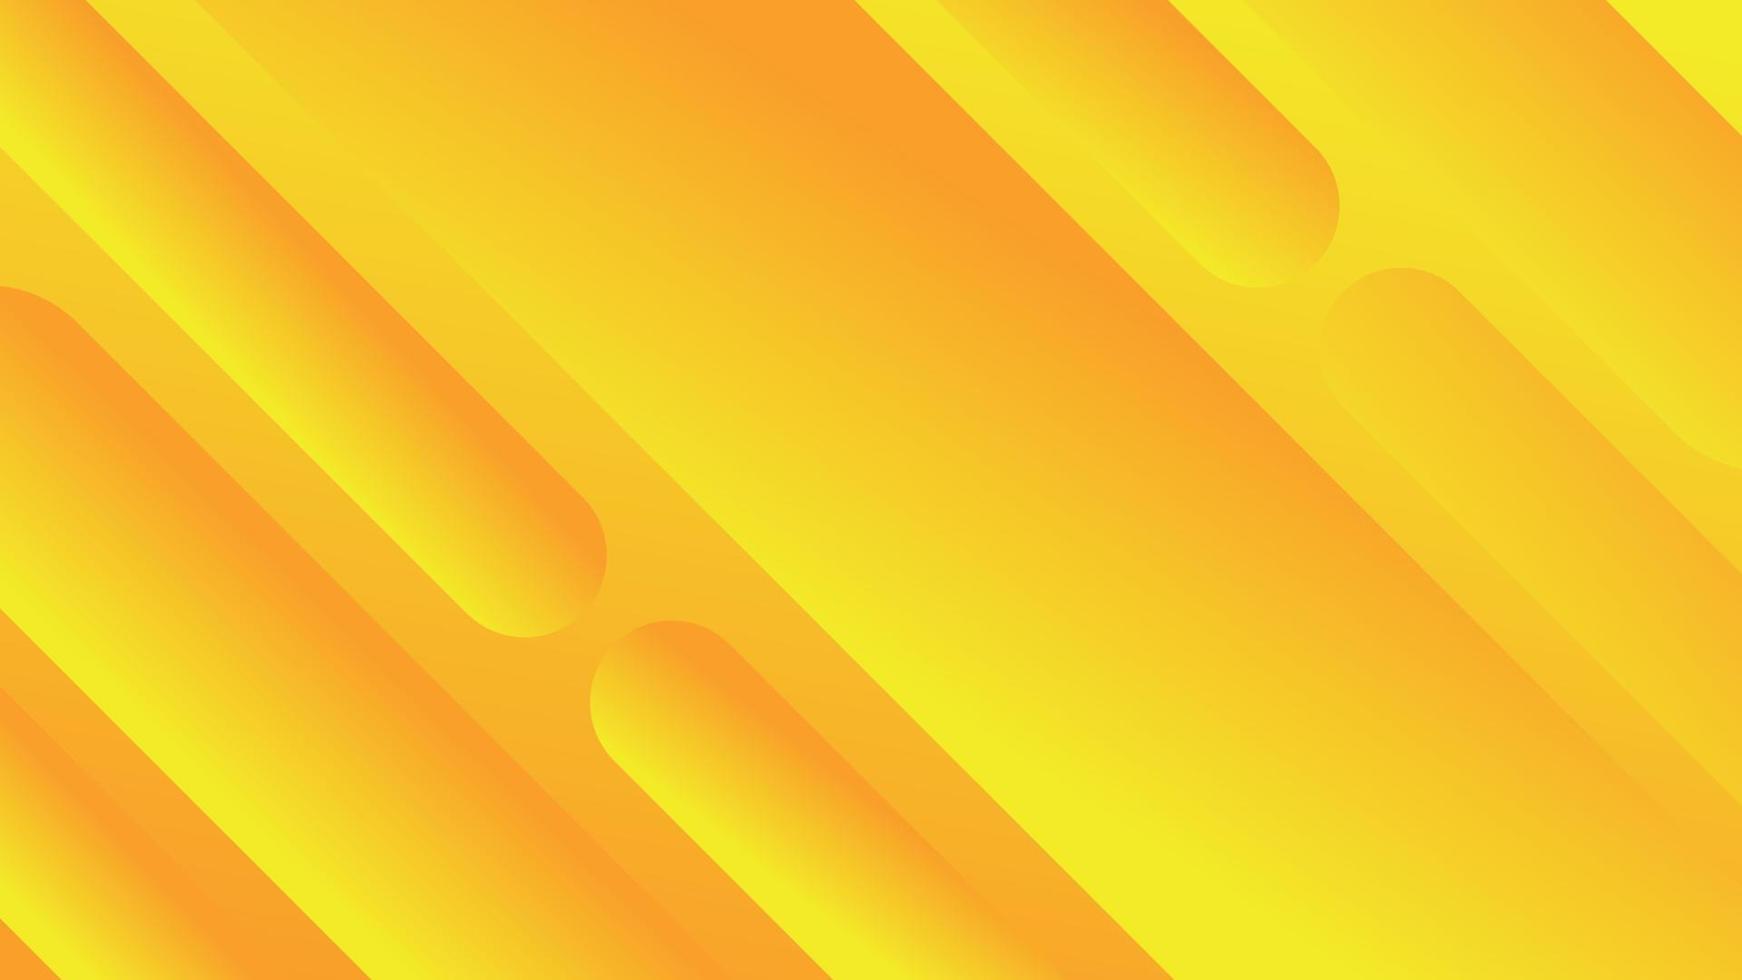 gradient bakground vector and ilustration, orange background vector